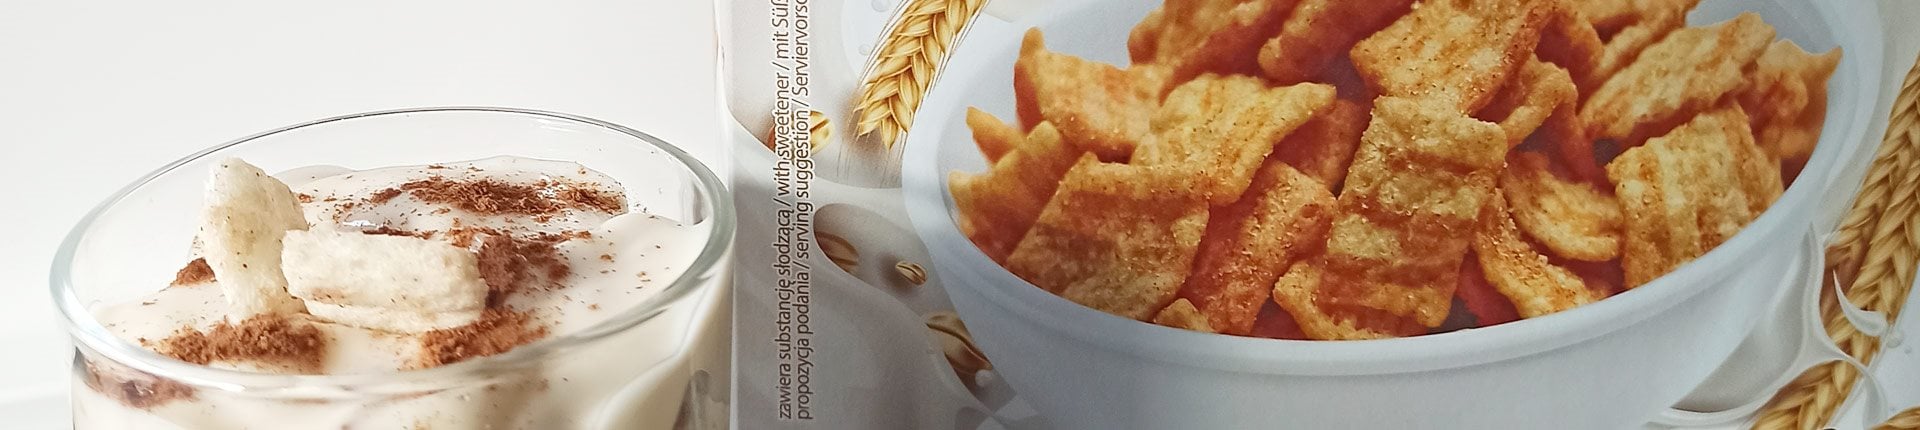 Nutlove Crunchy Flakes - ocena produktu